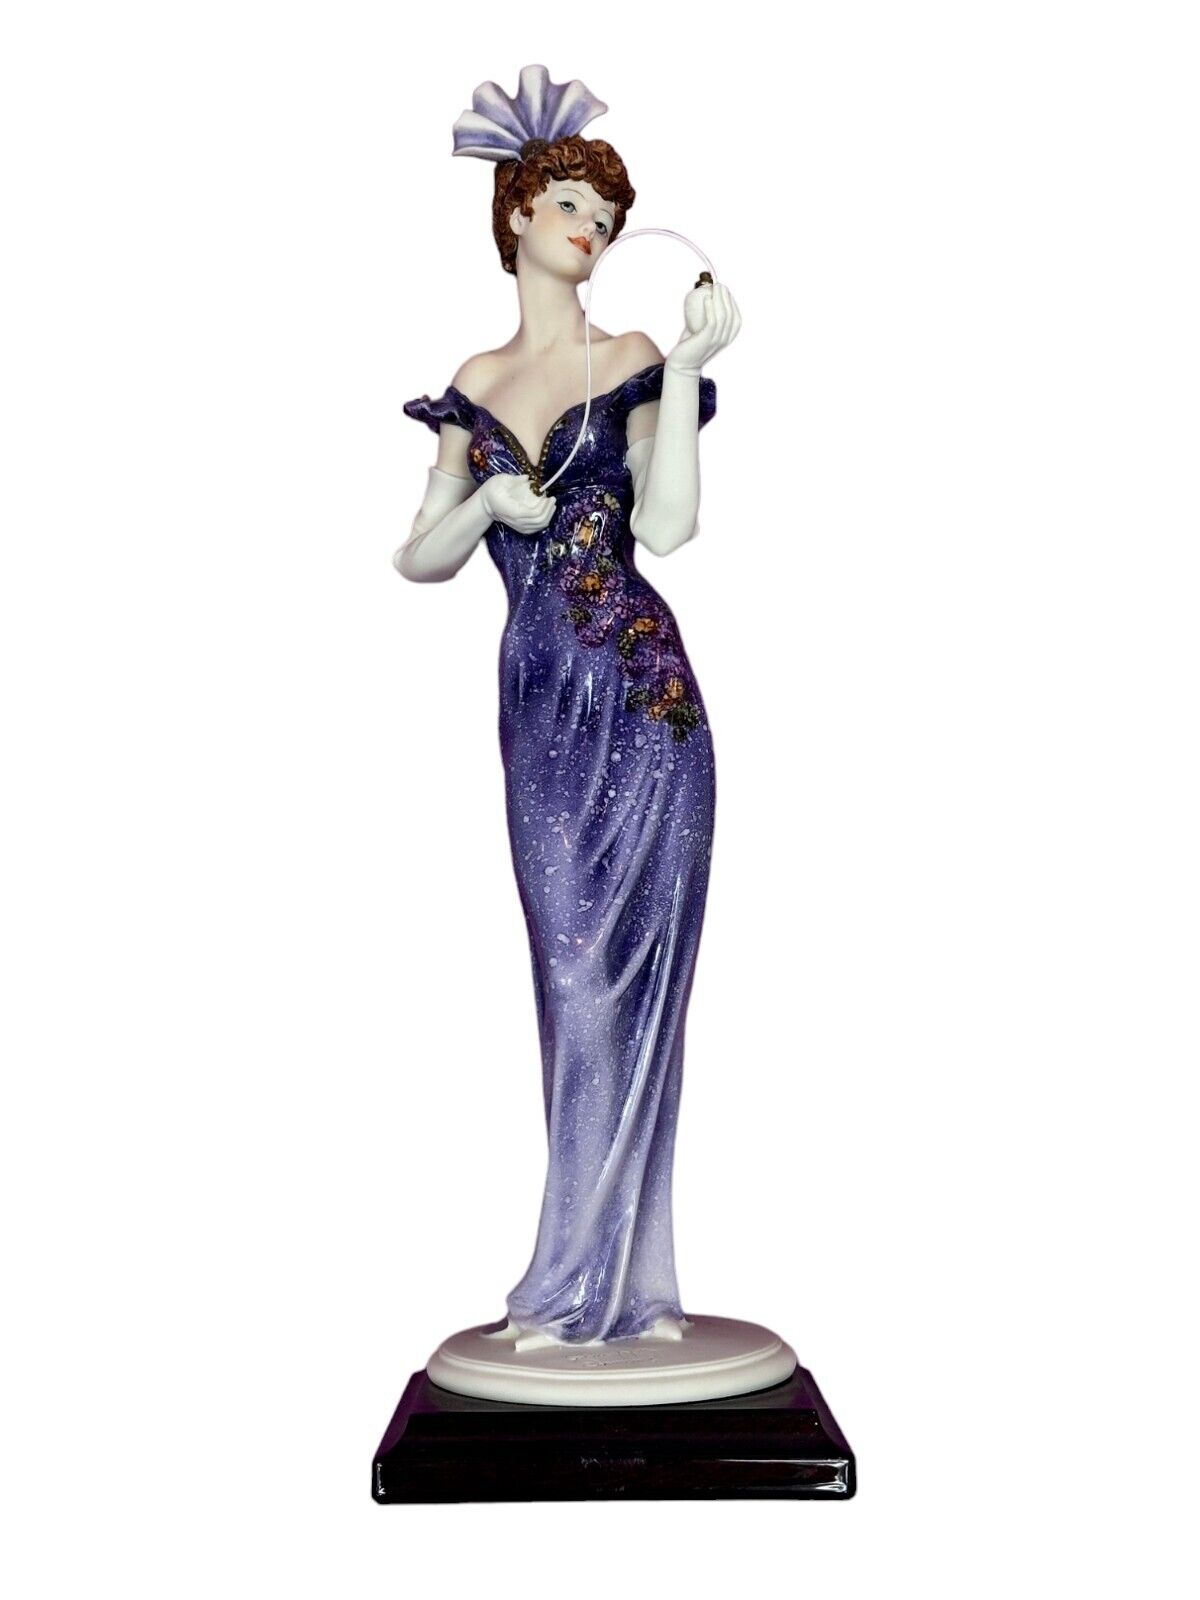 Giuseppe Armani Ashley Sculpture (1434c) Purple Dress Figurine Florence Italy